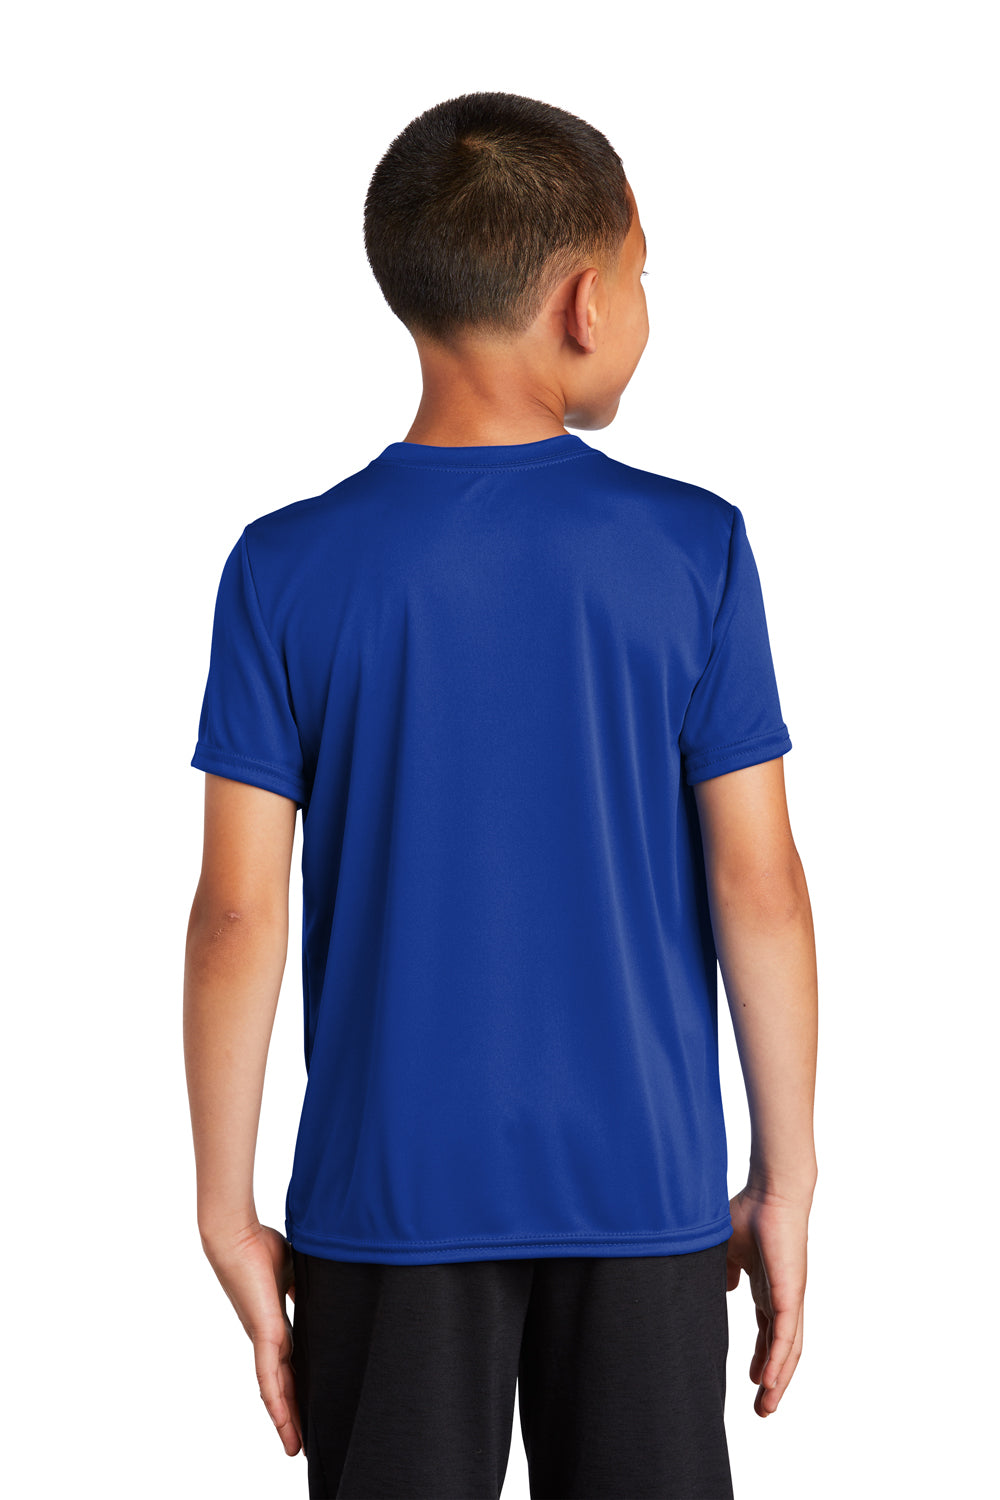 Port & Company PC380Y Youth Dry Zone Performance Moisture Wicking Short Sleeve Crewneck T-Shirt True Royal Blue Back